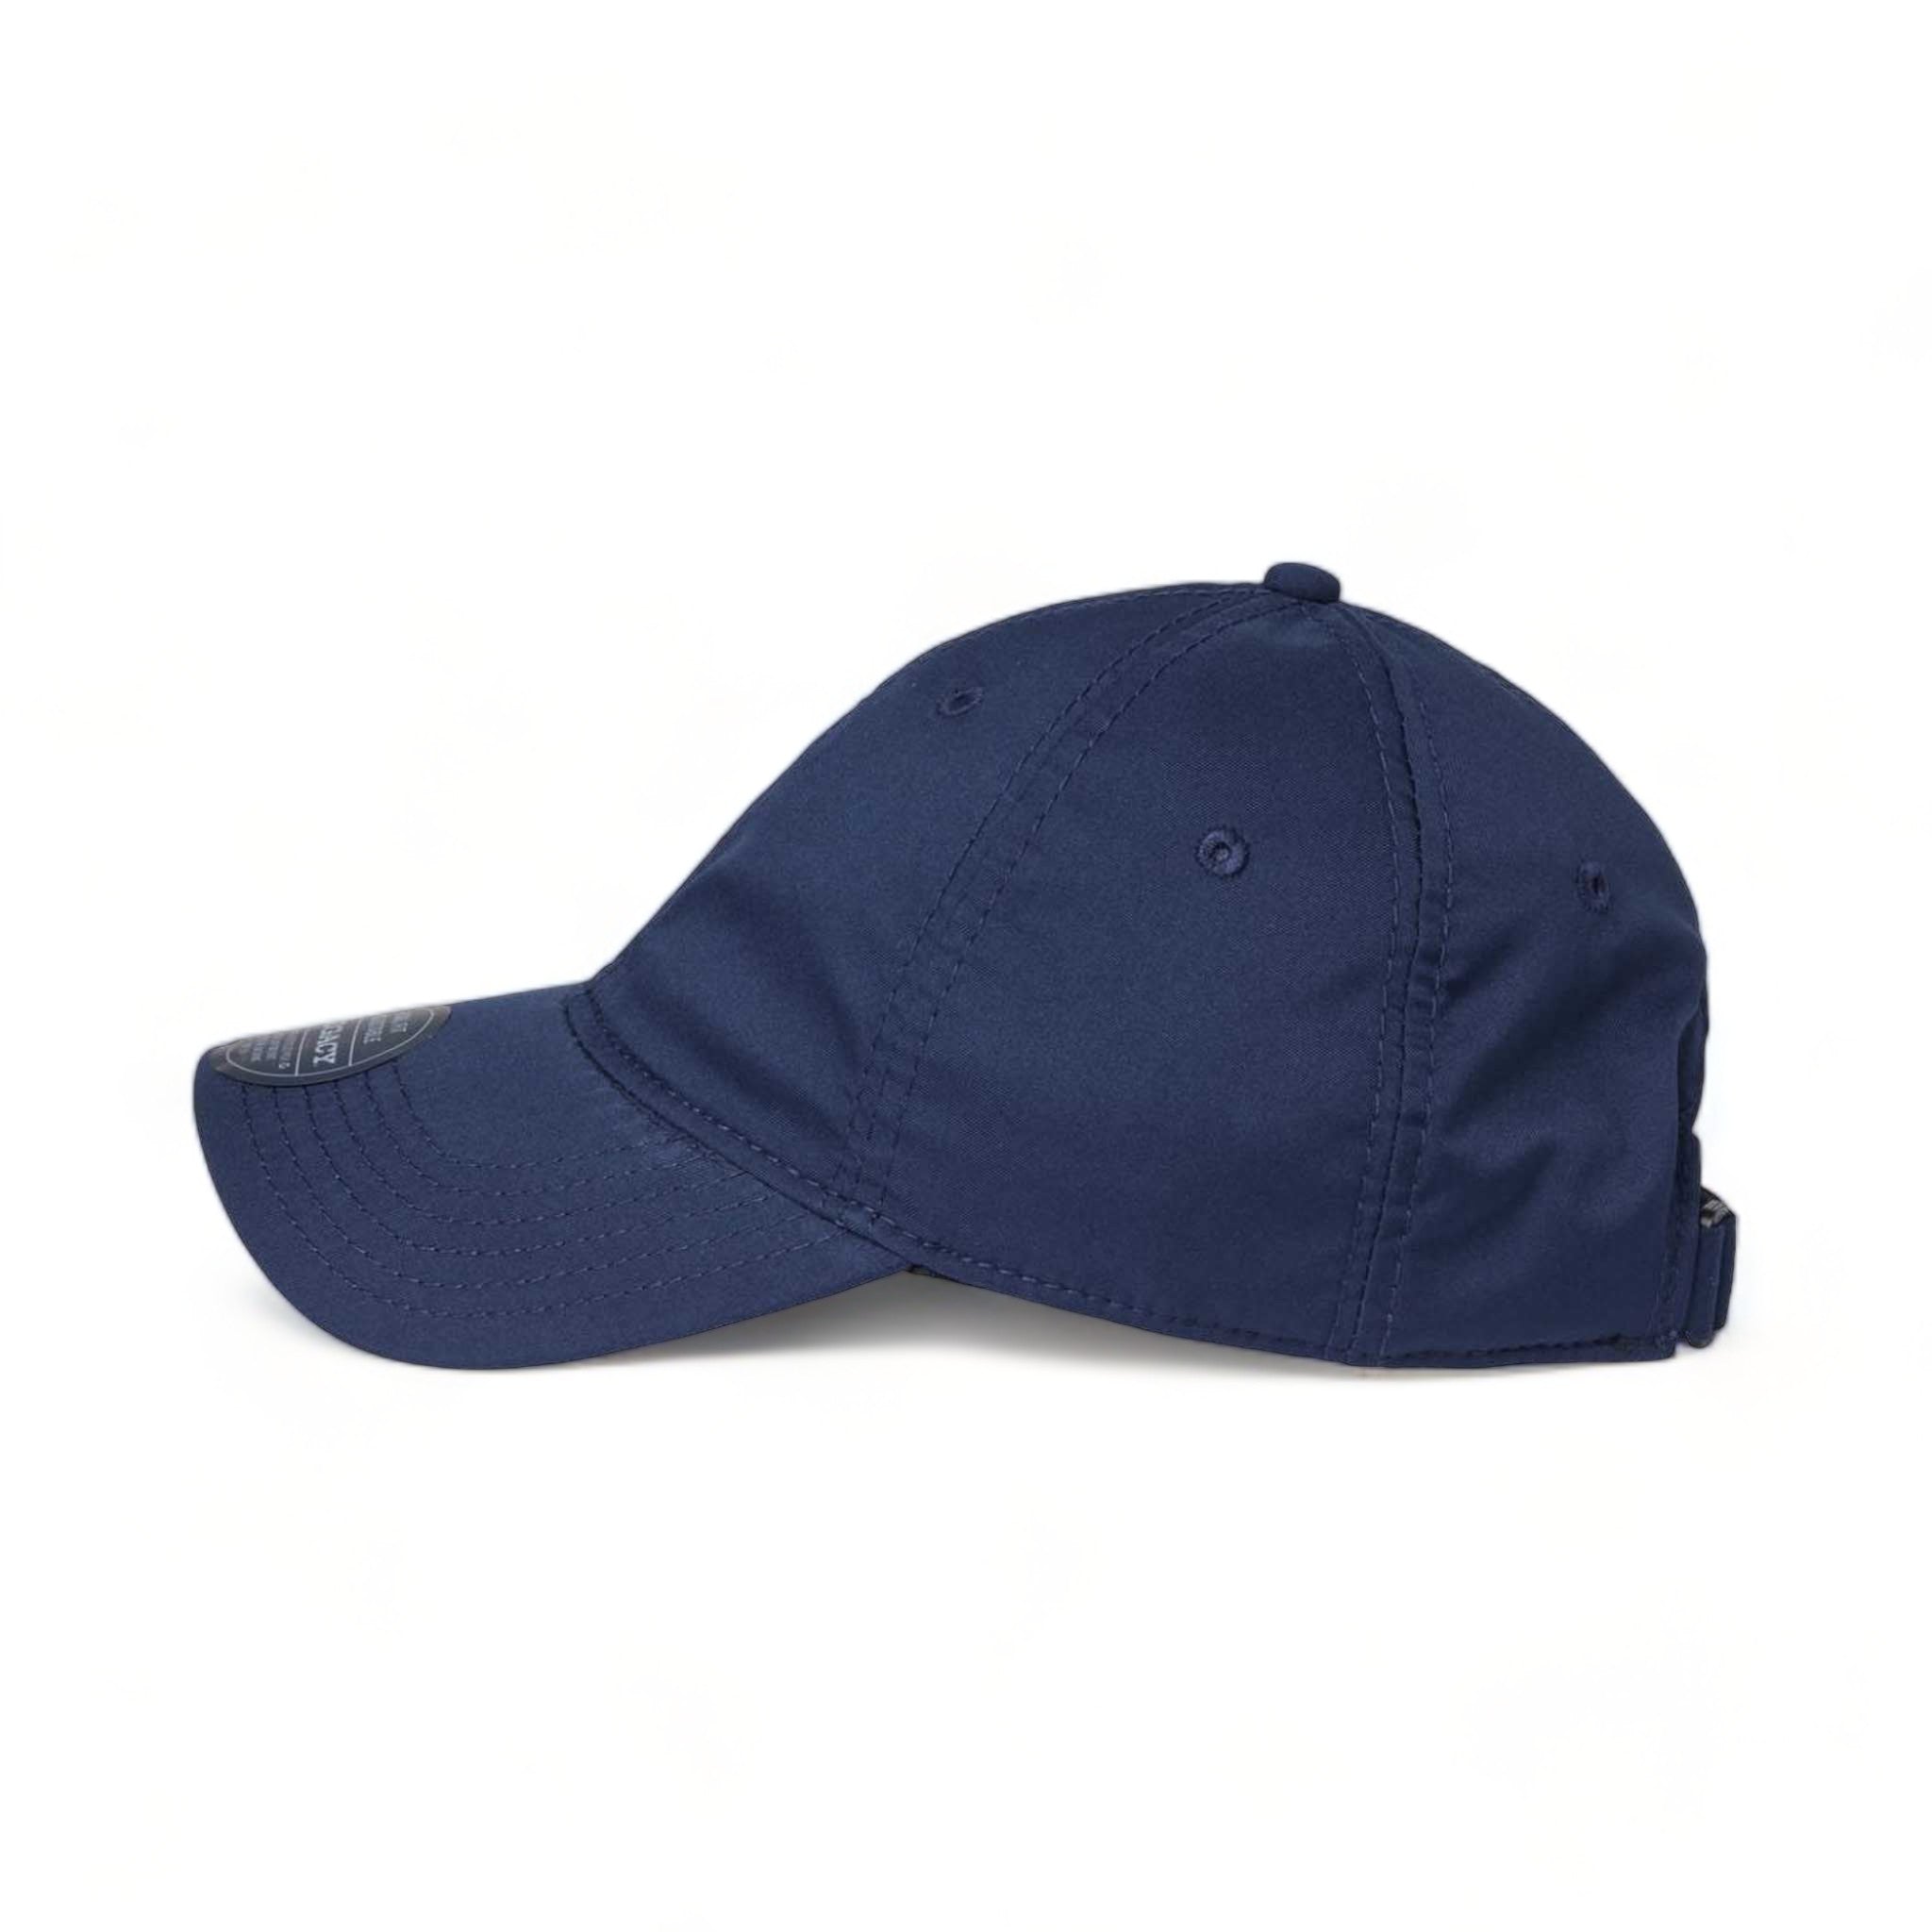 Side view of LEGACY CFA custom hat in navy